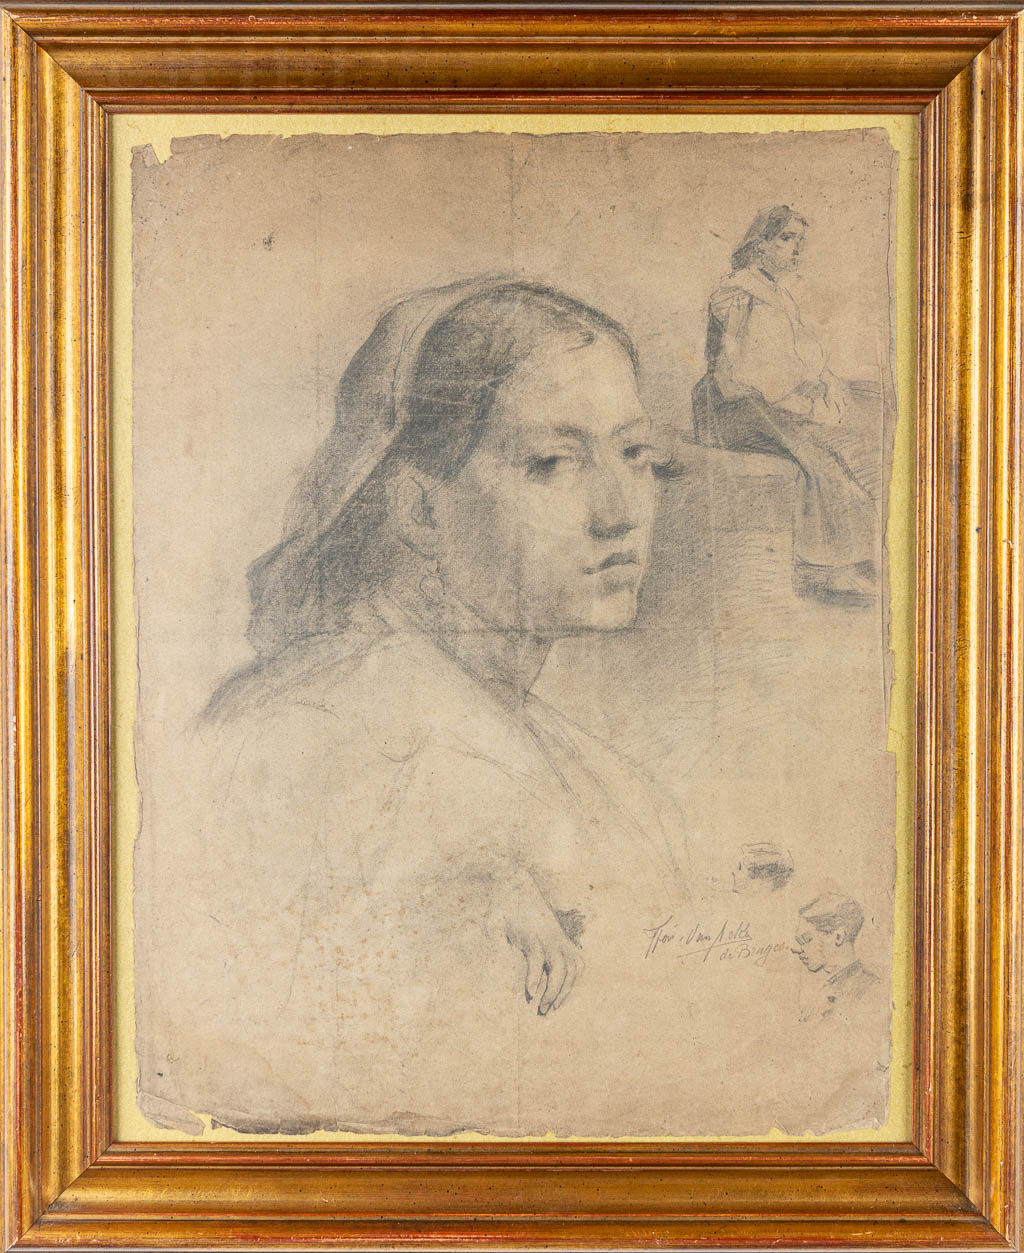 Flori Marie VAN ACKER (1858-1940) 'A study' a drawing, pencil on paper. (47 x 63 cm)